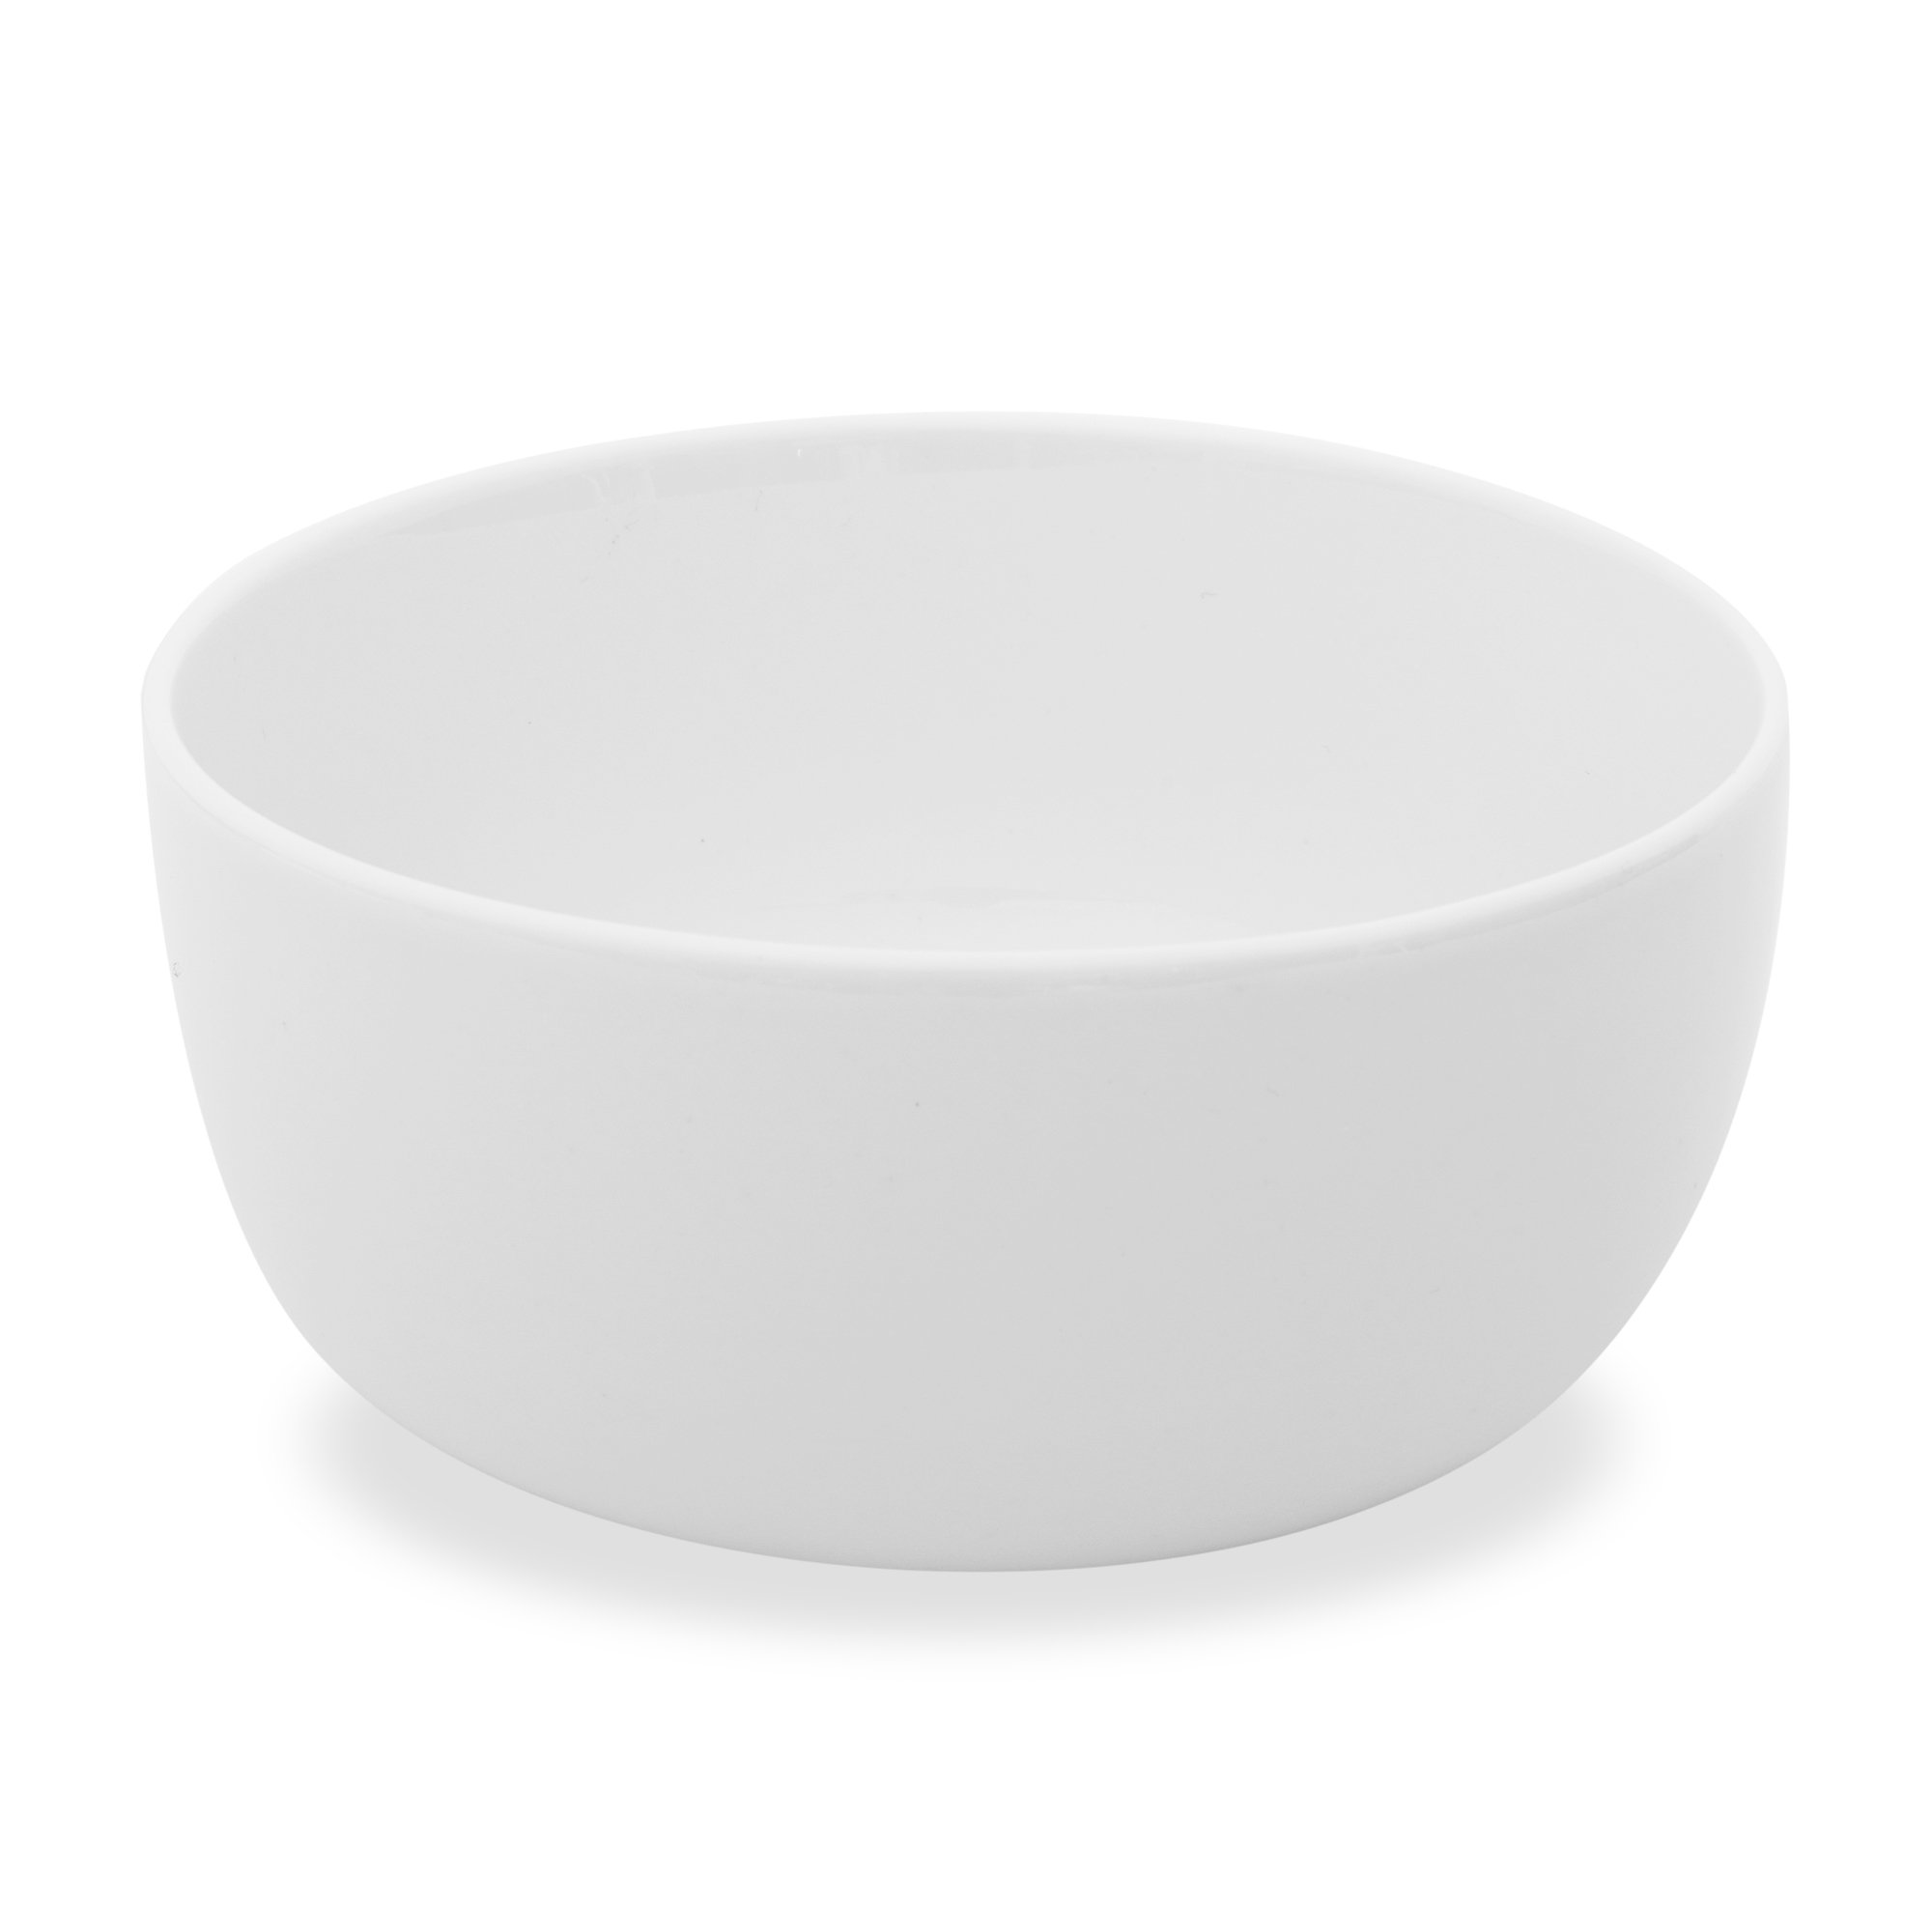 Safdie & Co. Inc. Premium Dinnerware Collection 18 oz. Soup Bowl